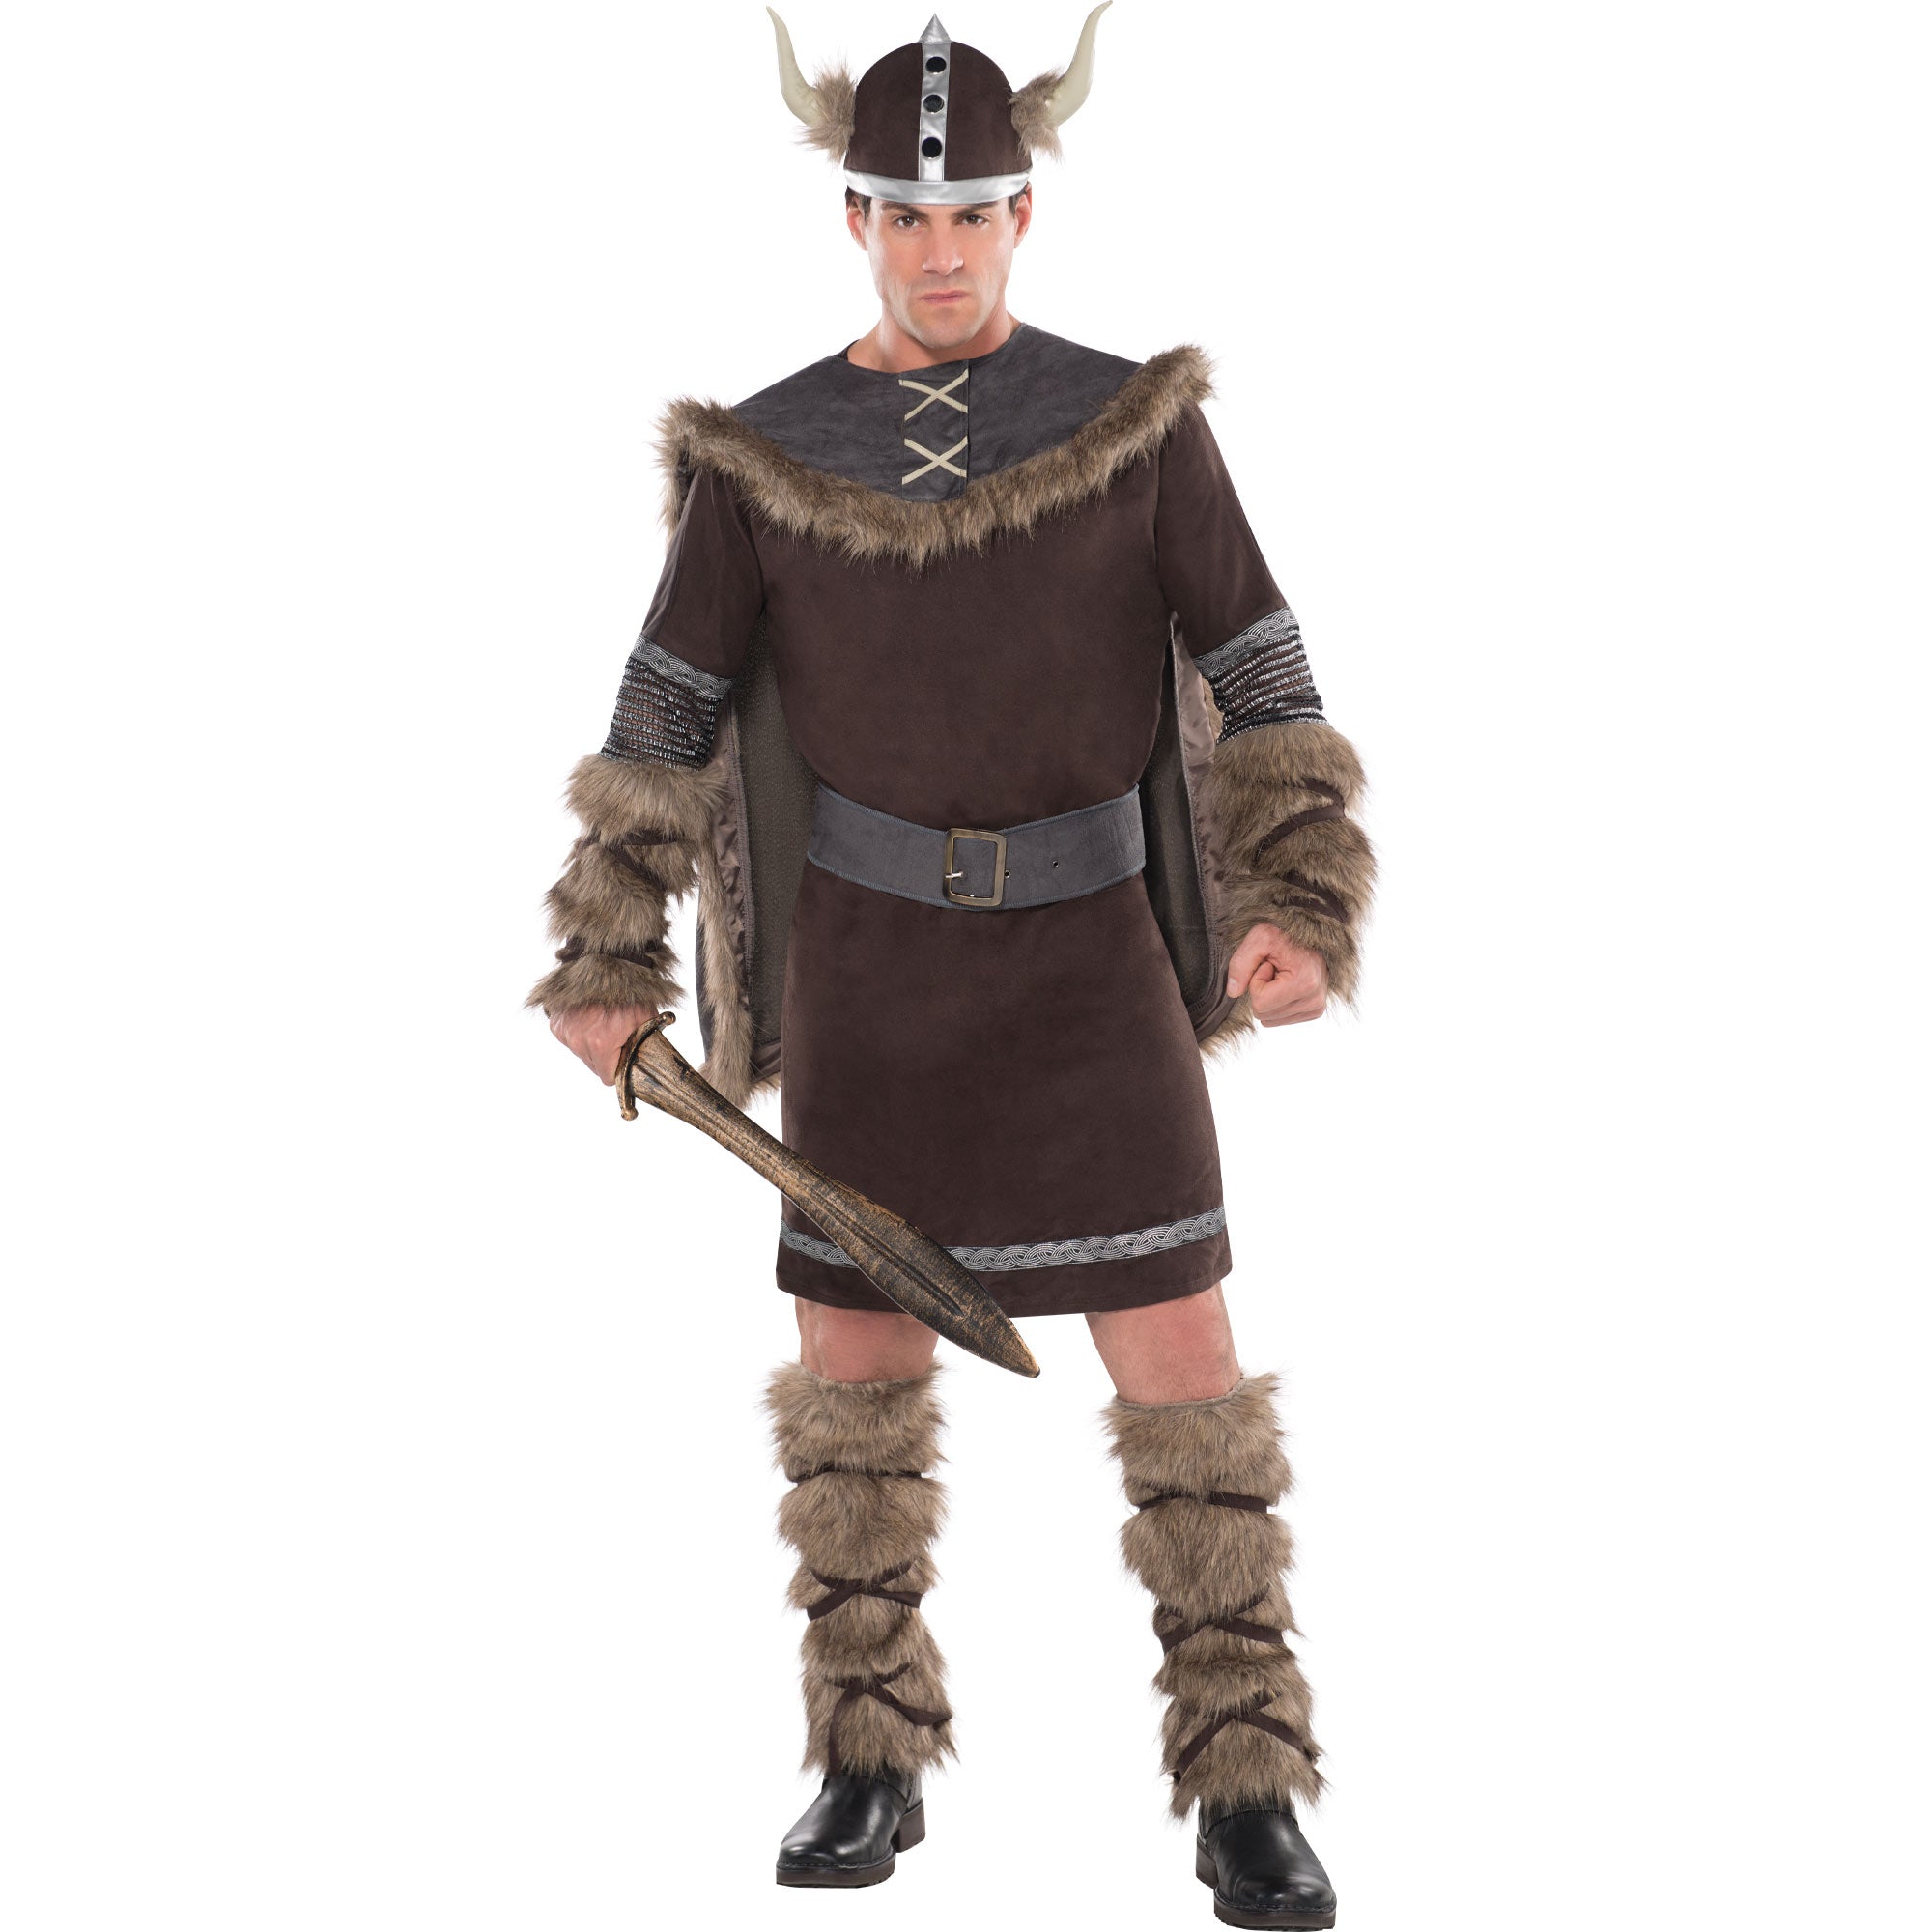 Costume Viking Warrior Size Large to XL